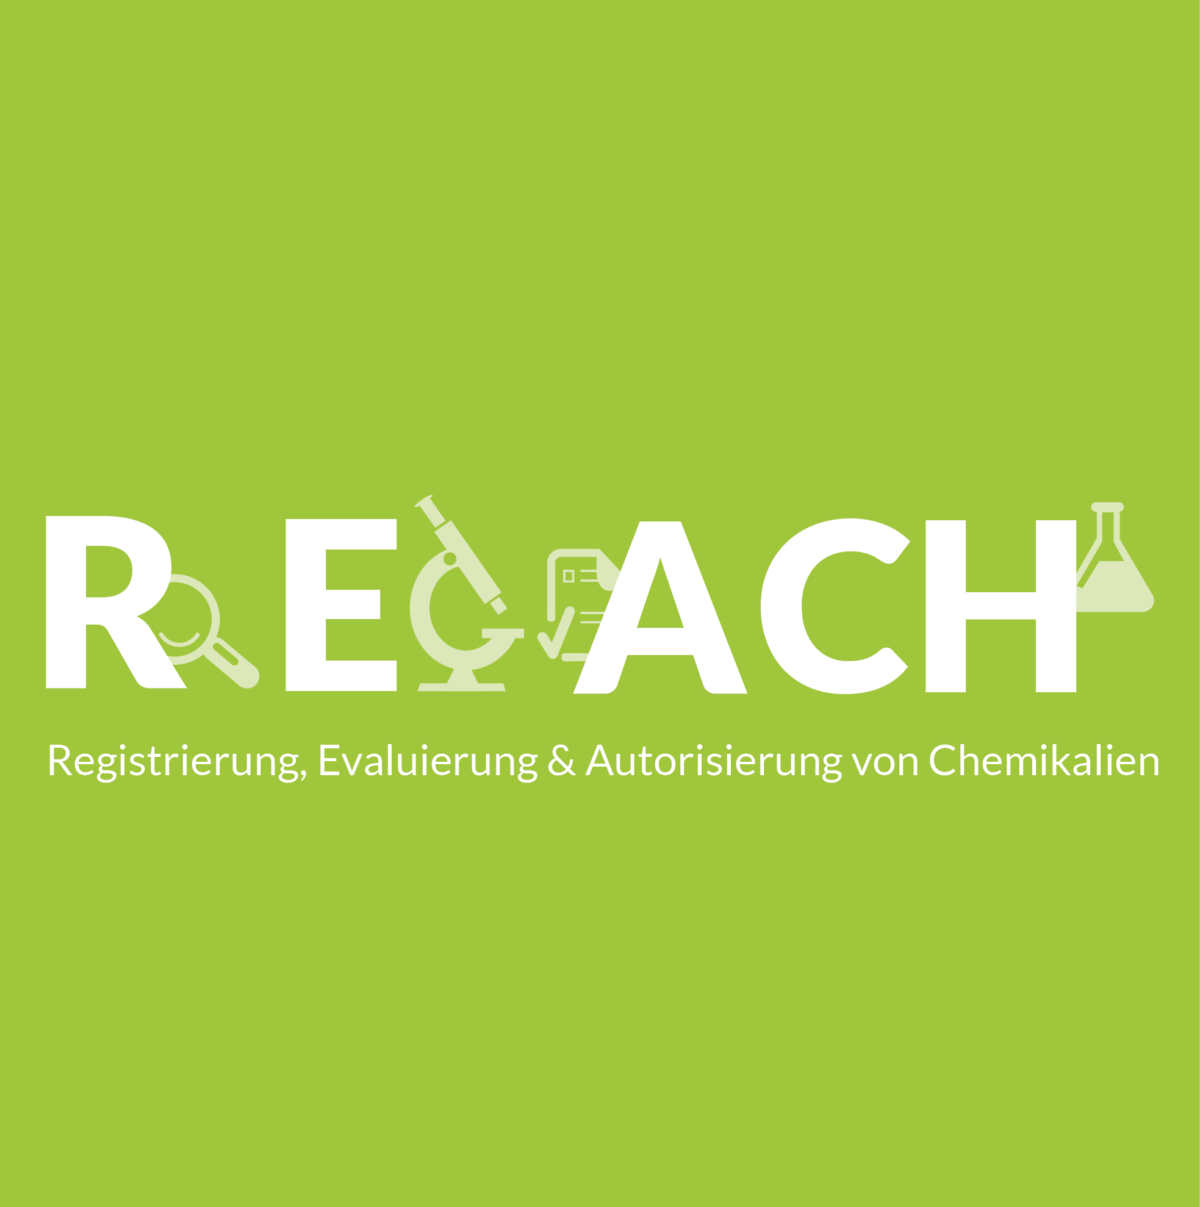 Information on the REACH Regulation